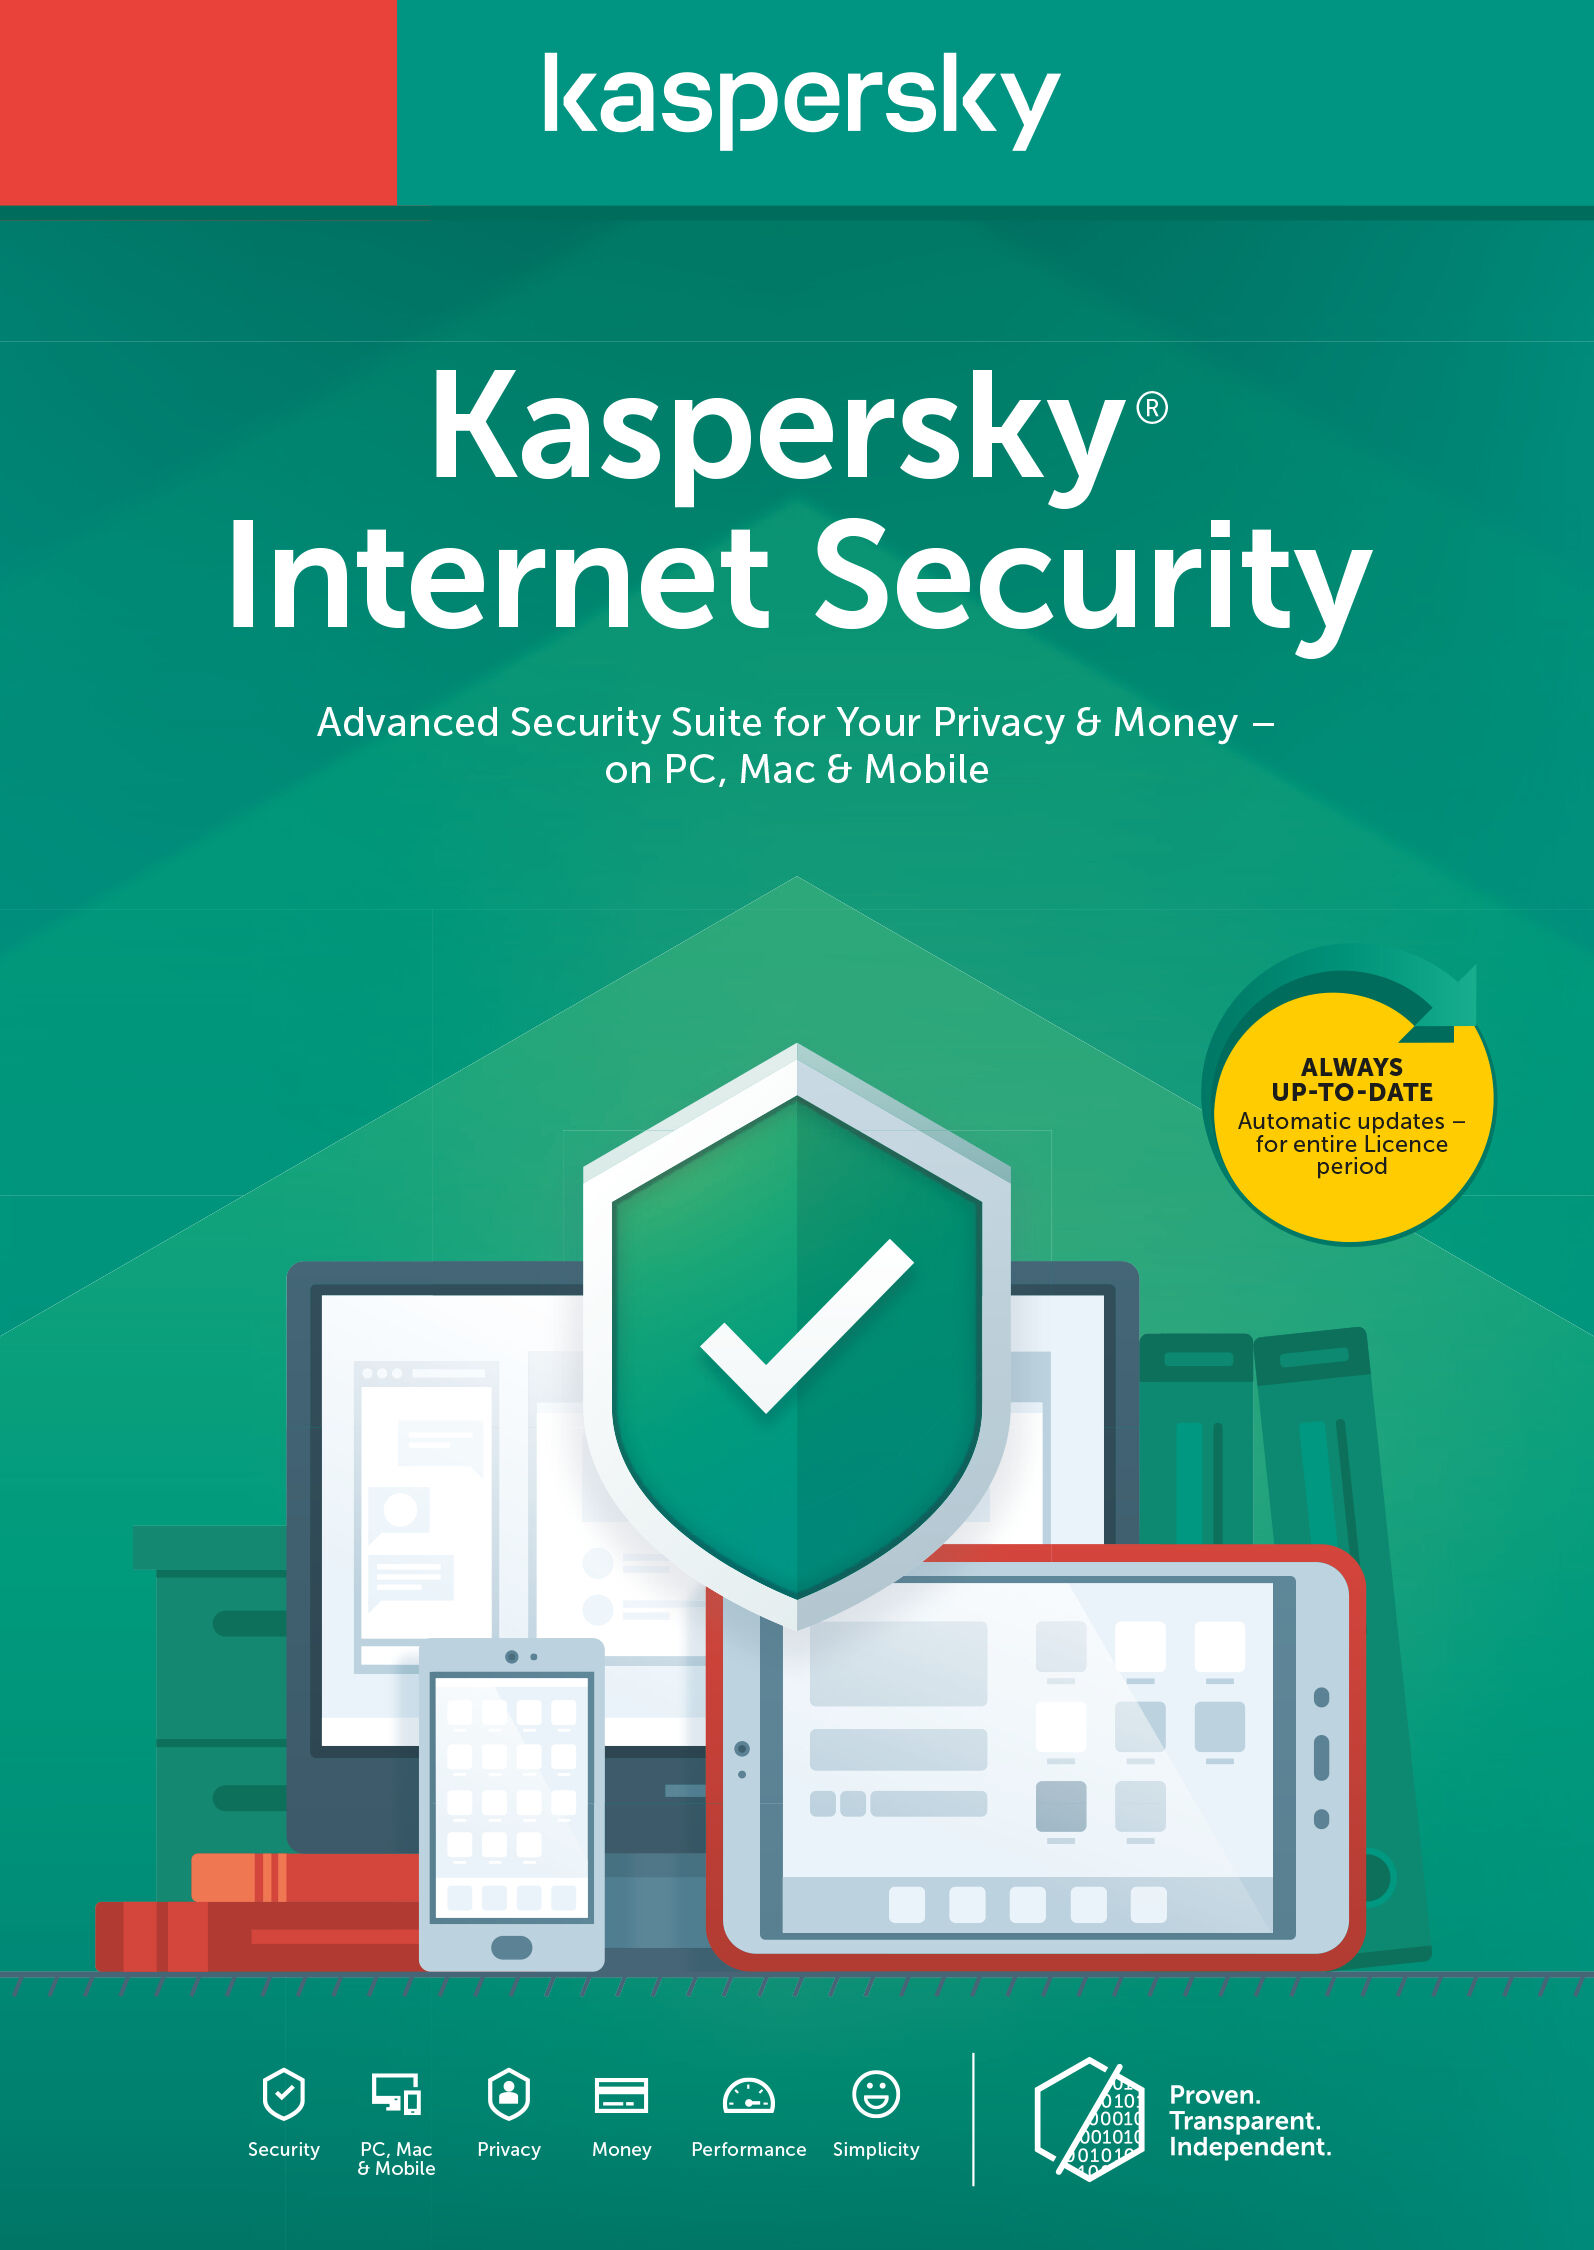 Kaspersky Internet Security 2020 - 5 devices